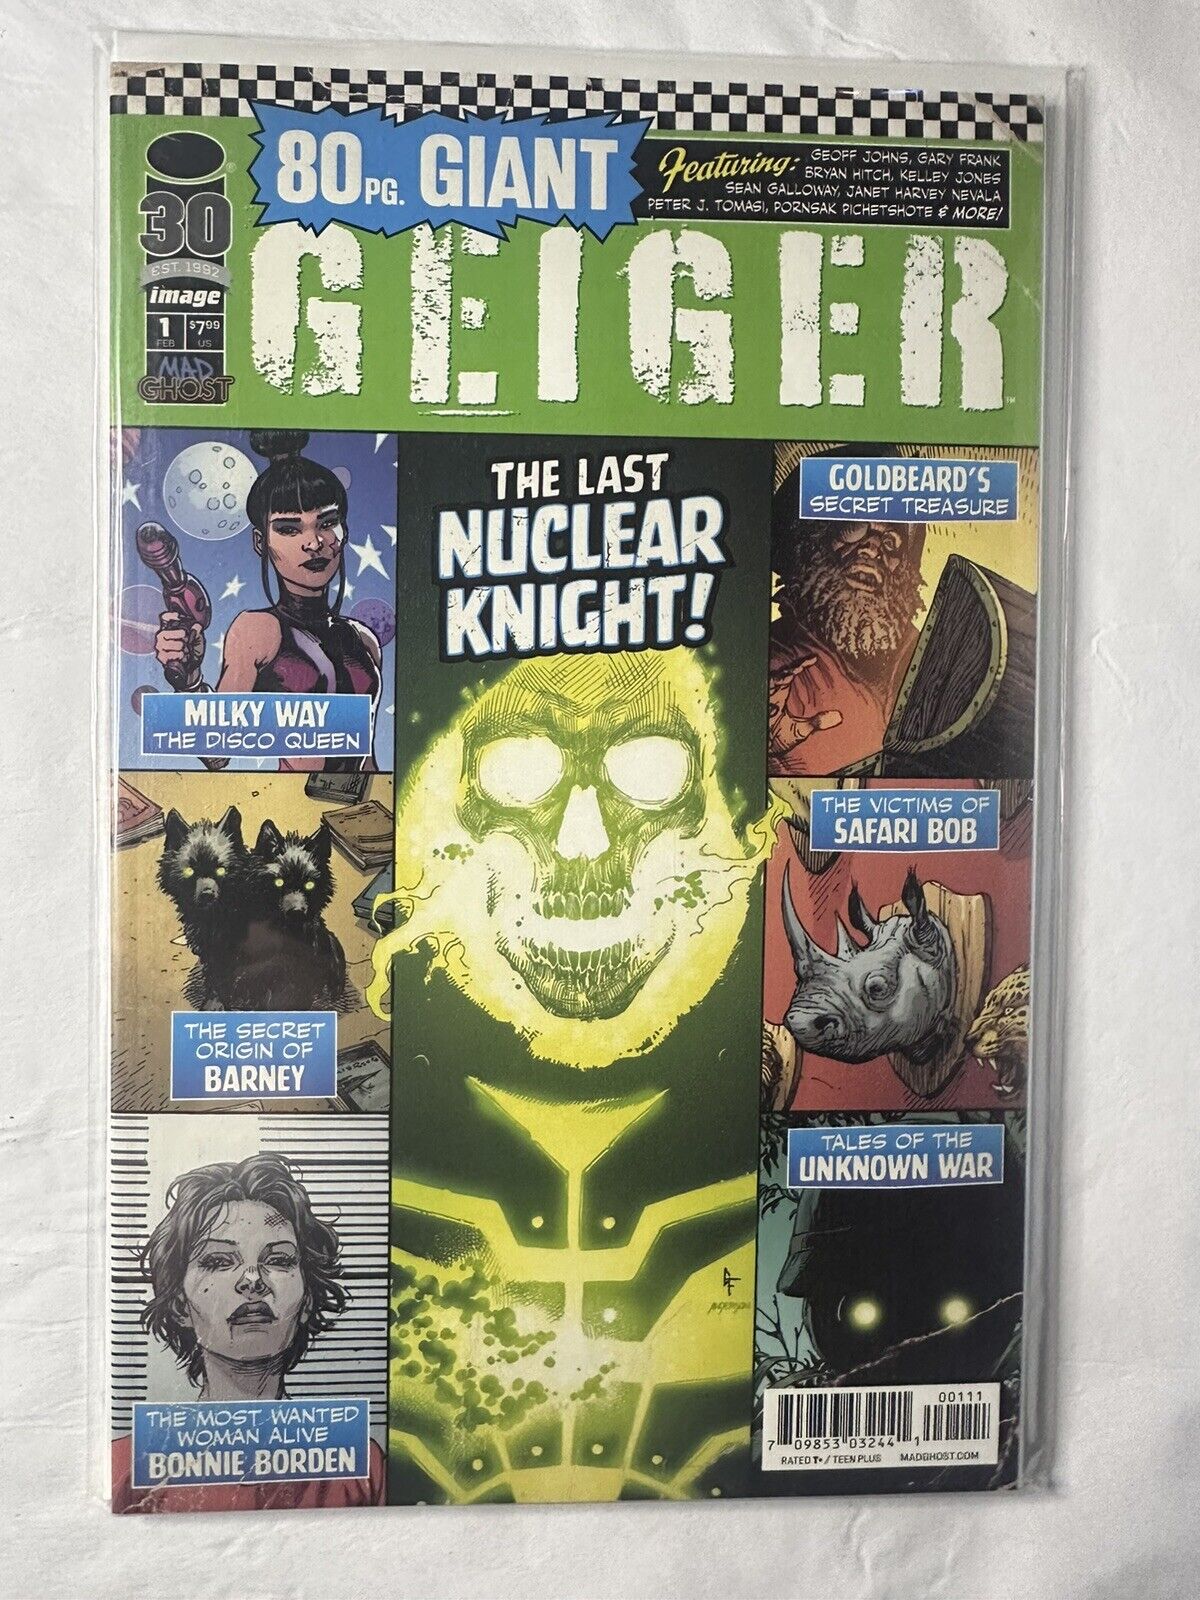 80 Page Giant Geiger #1 Image Comics 1st Print